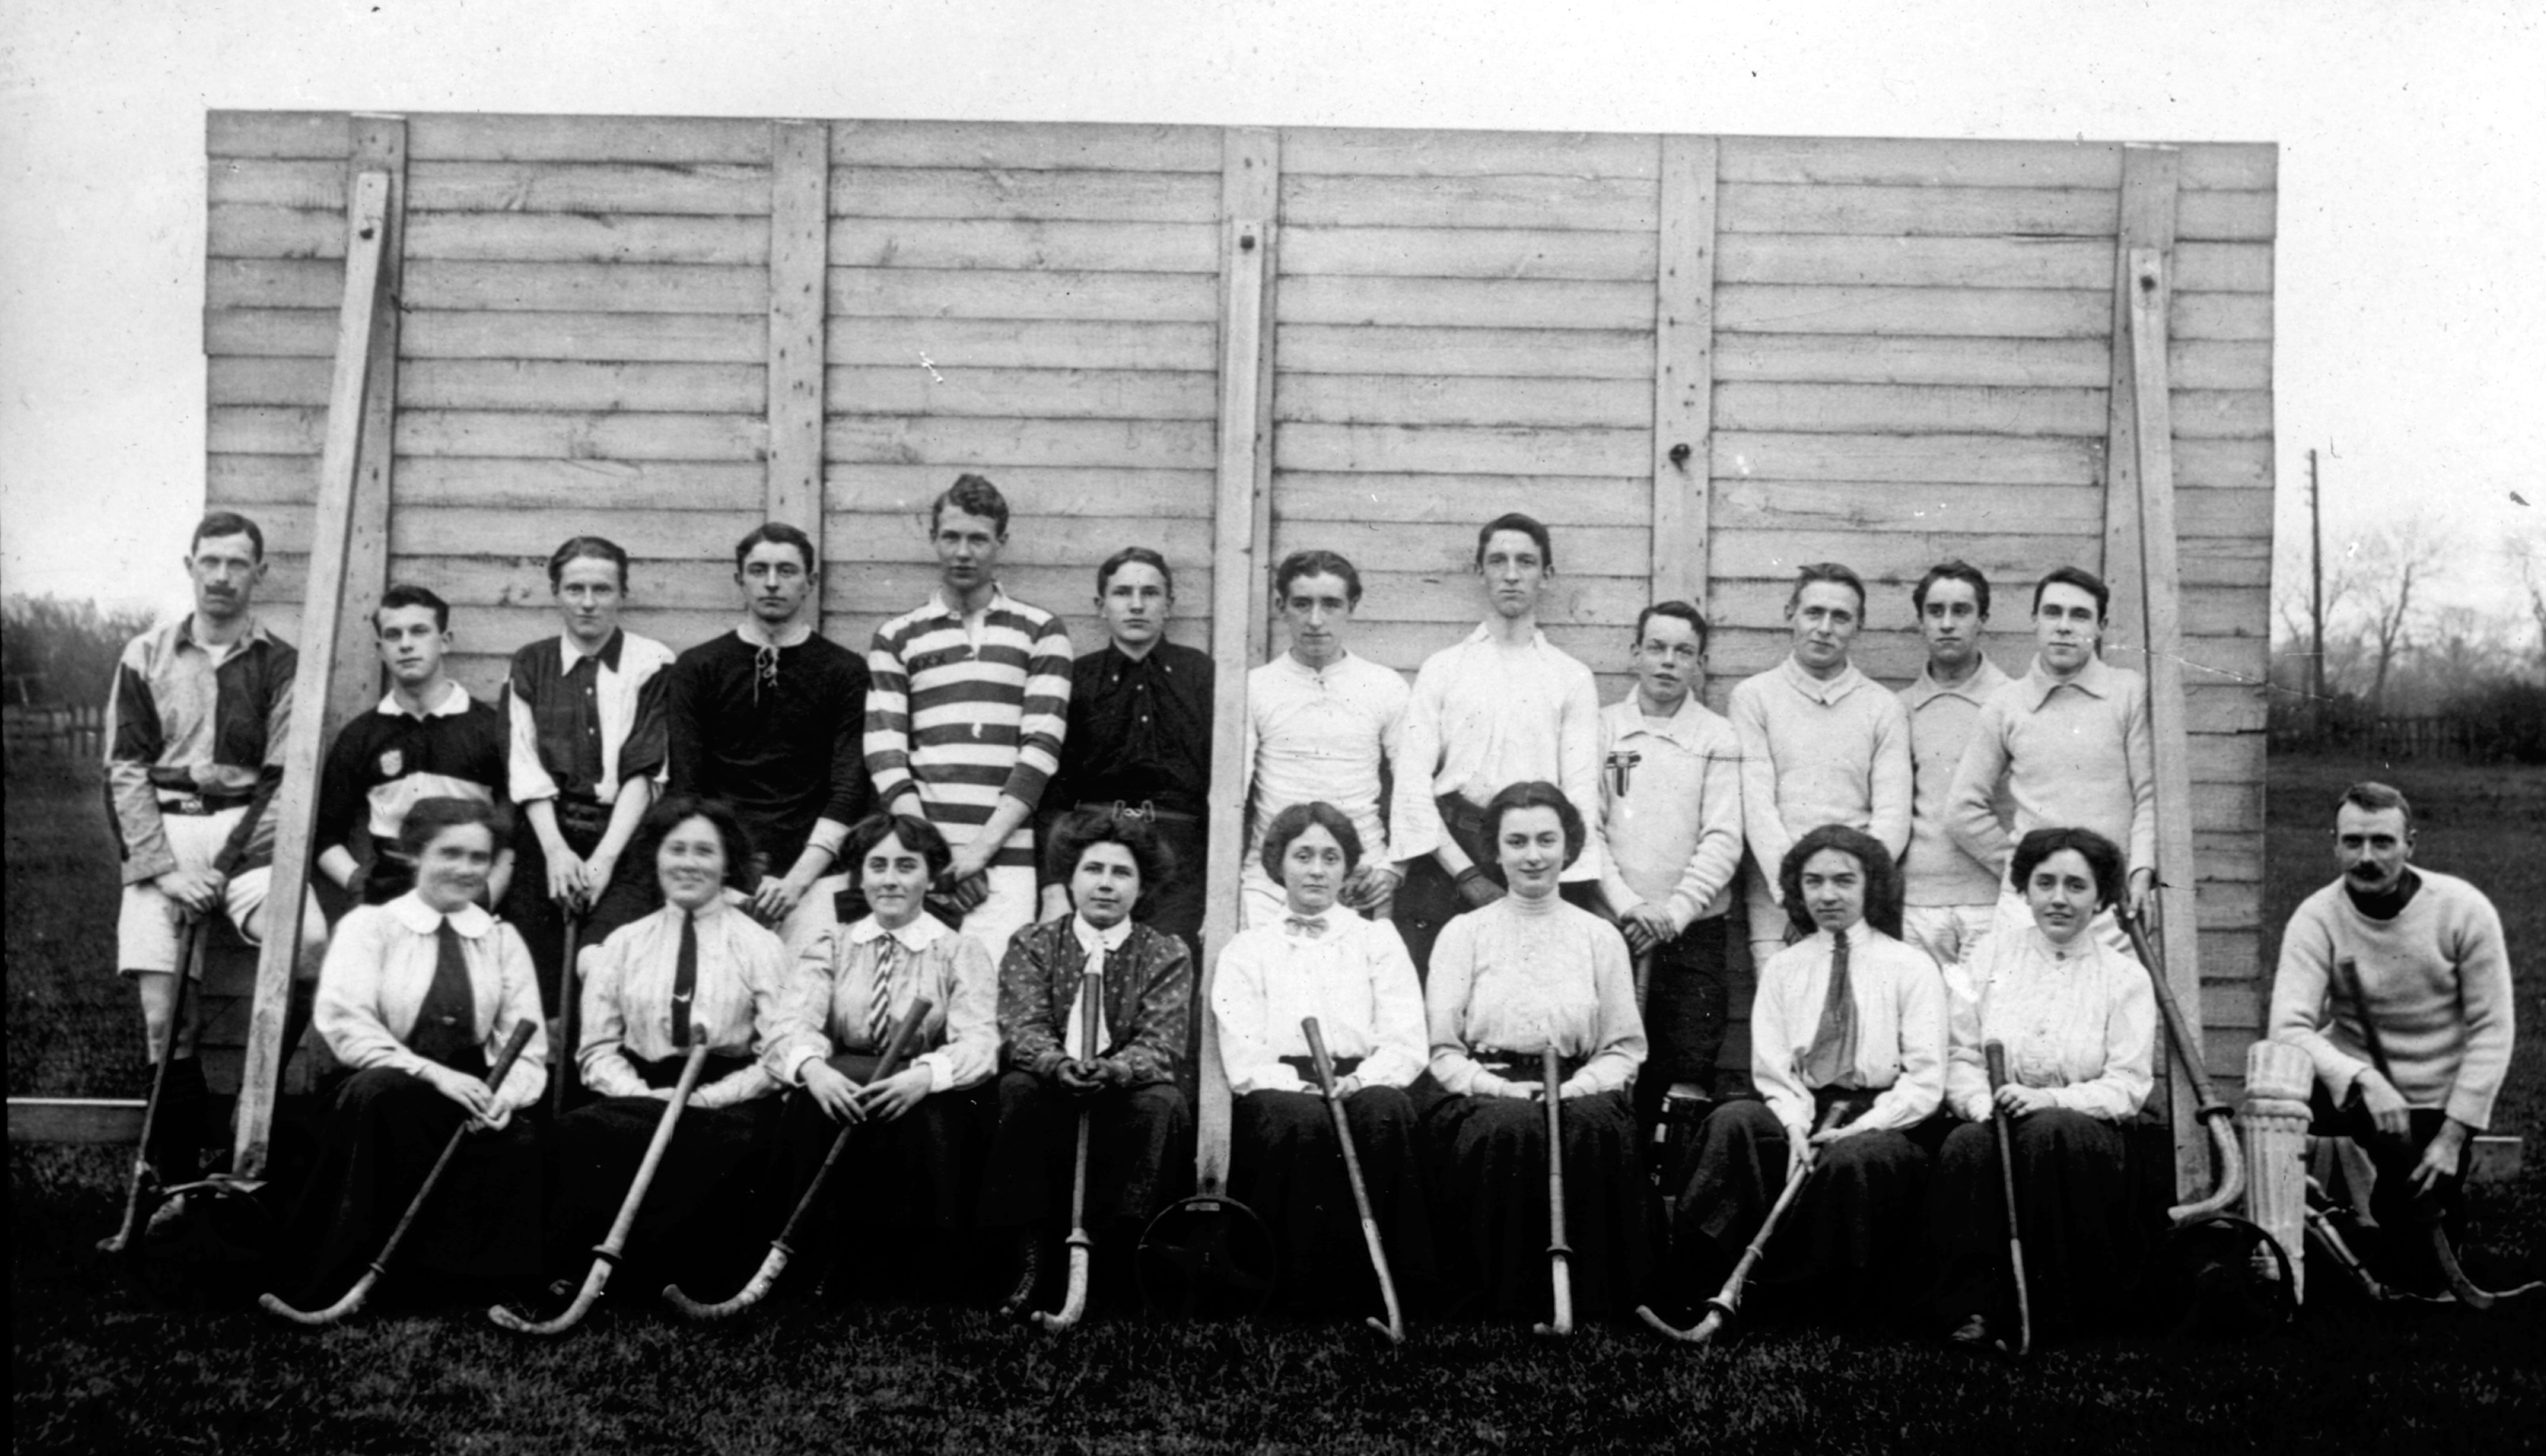 Harrogate lacrosse team 1910